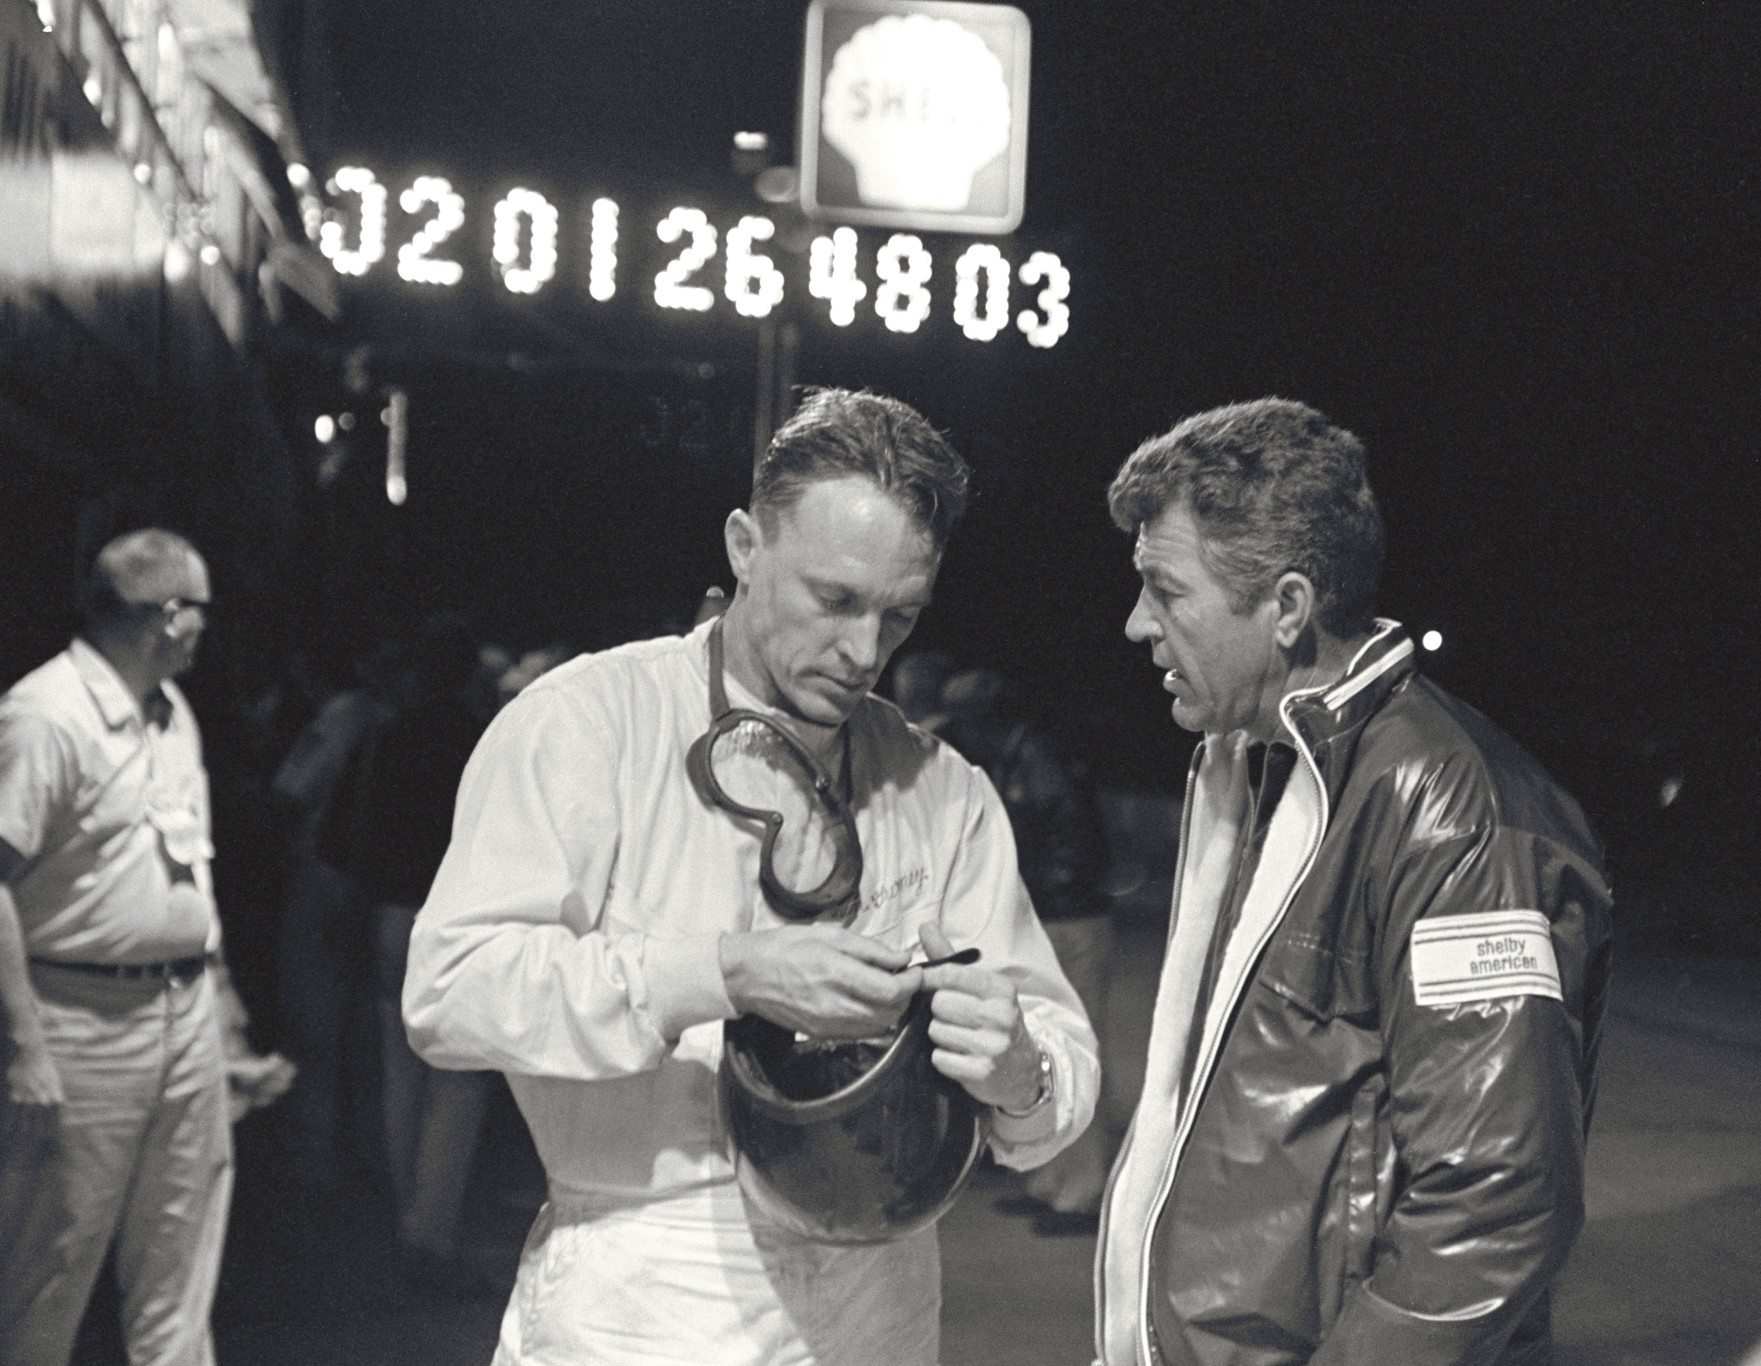 Carol Shelby and Dan Gurney at Sebring Ford Archives